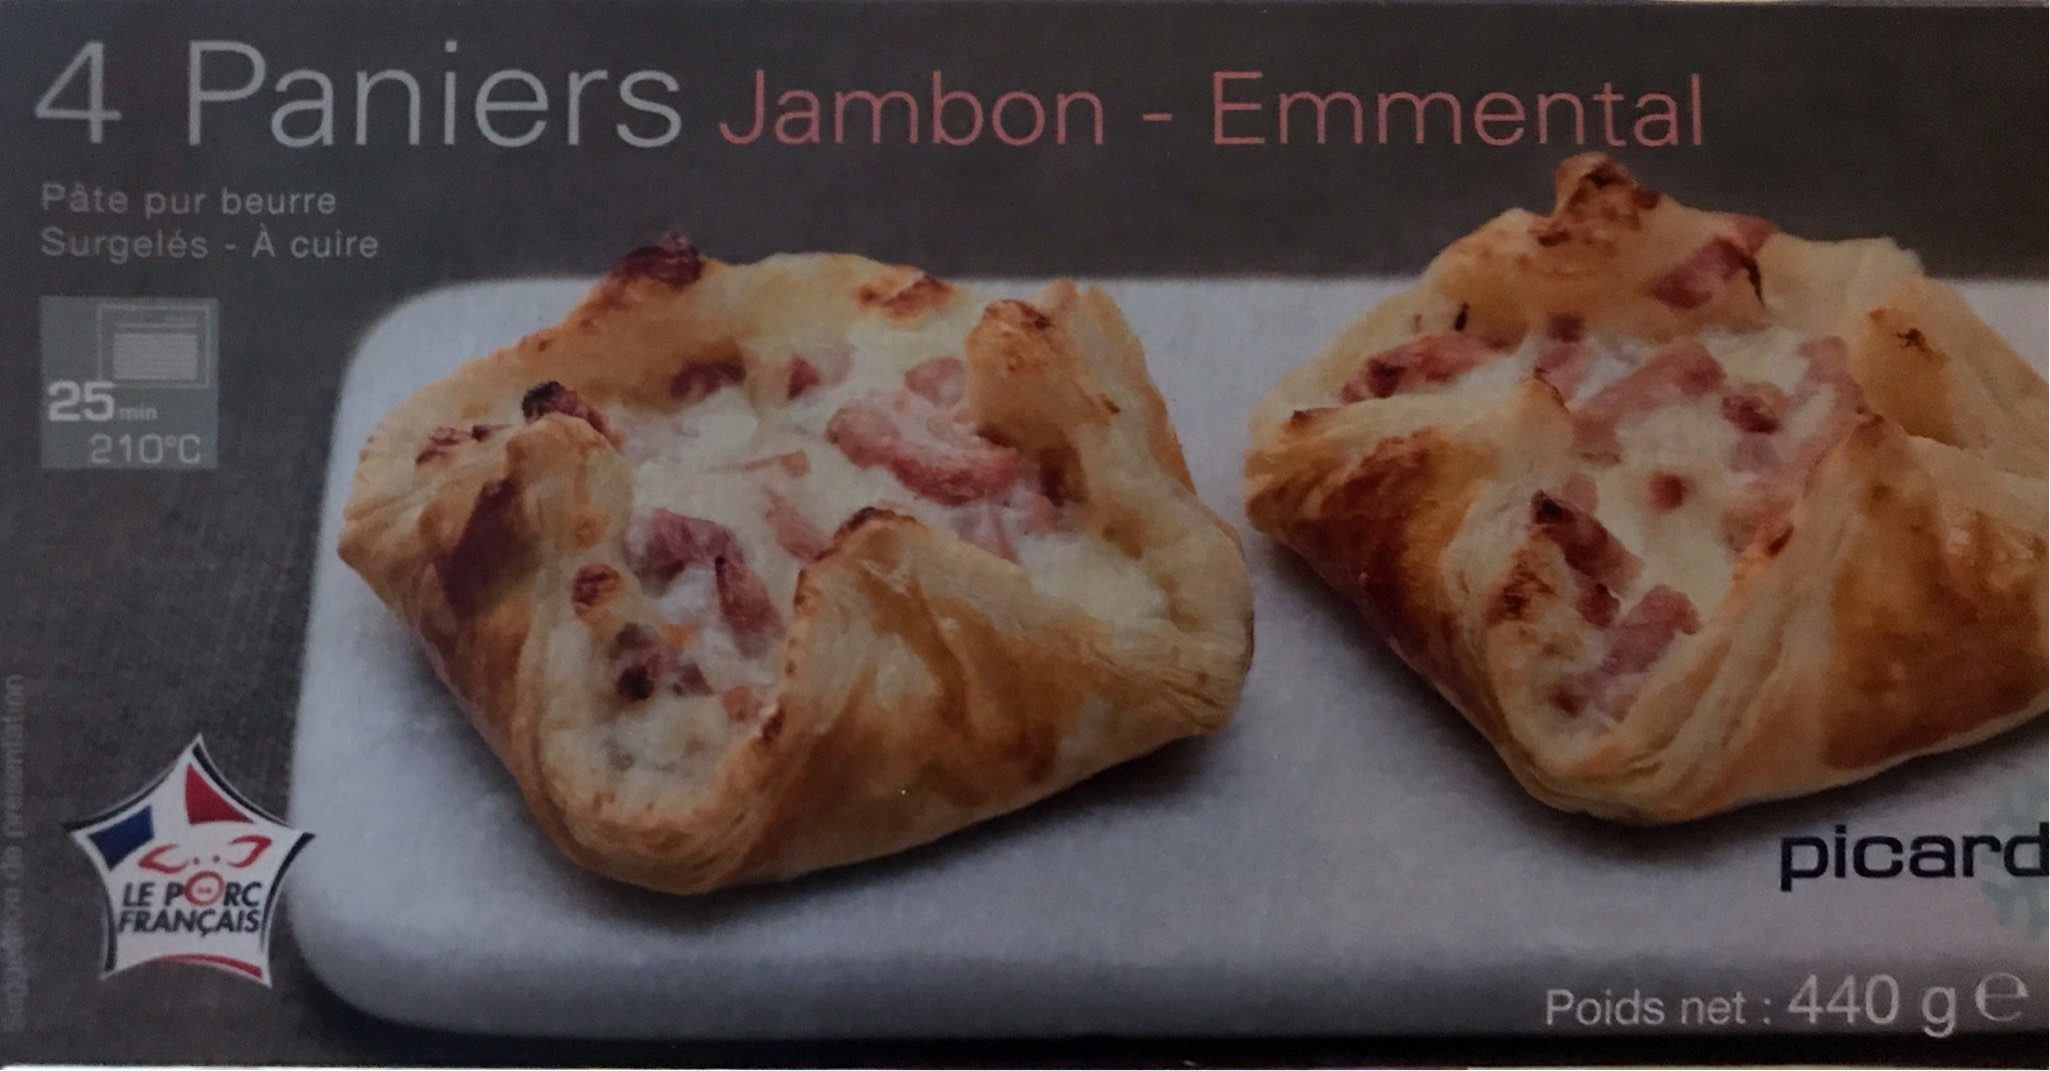 4 paniers jambon - emmental - Product - fr